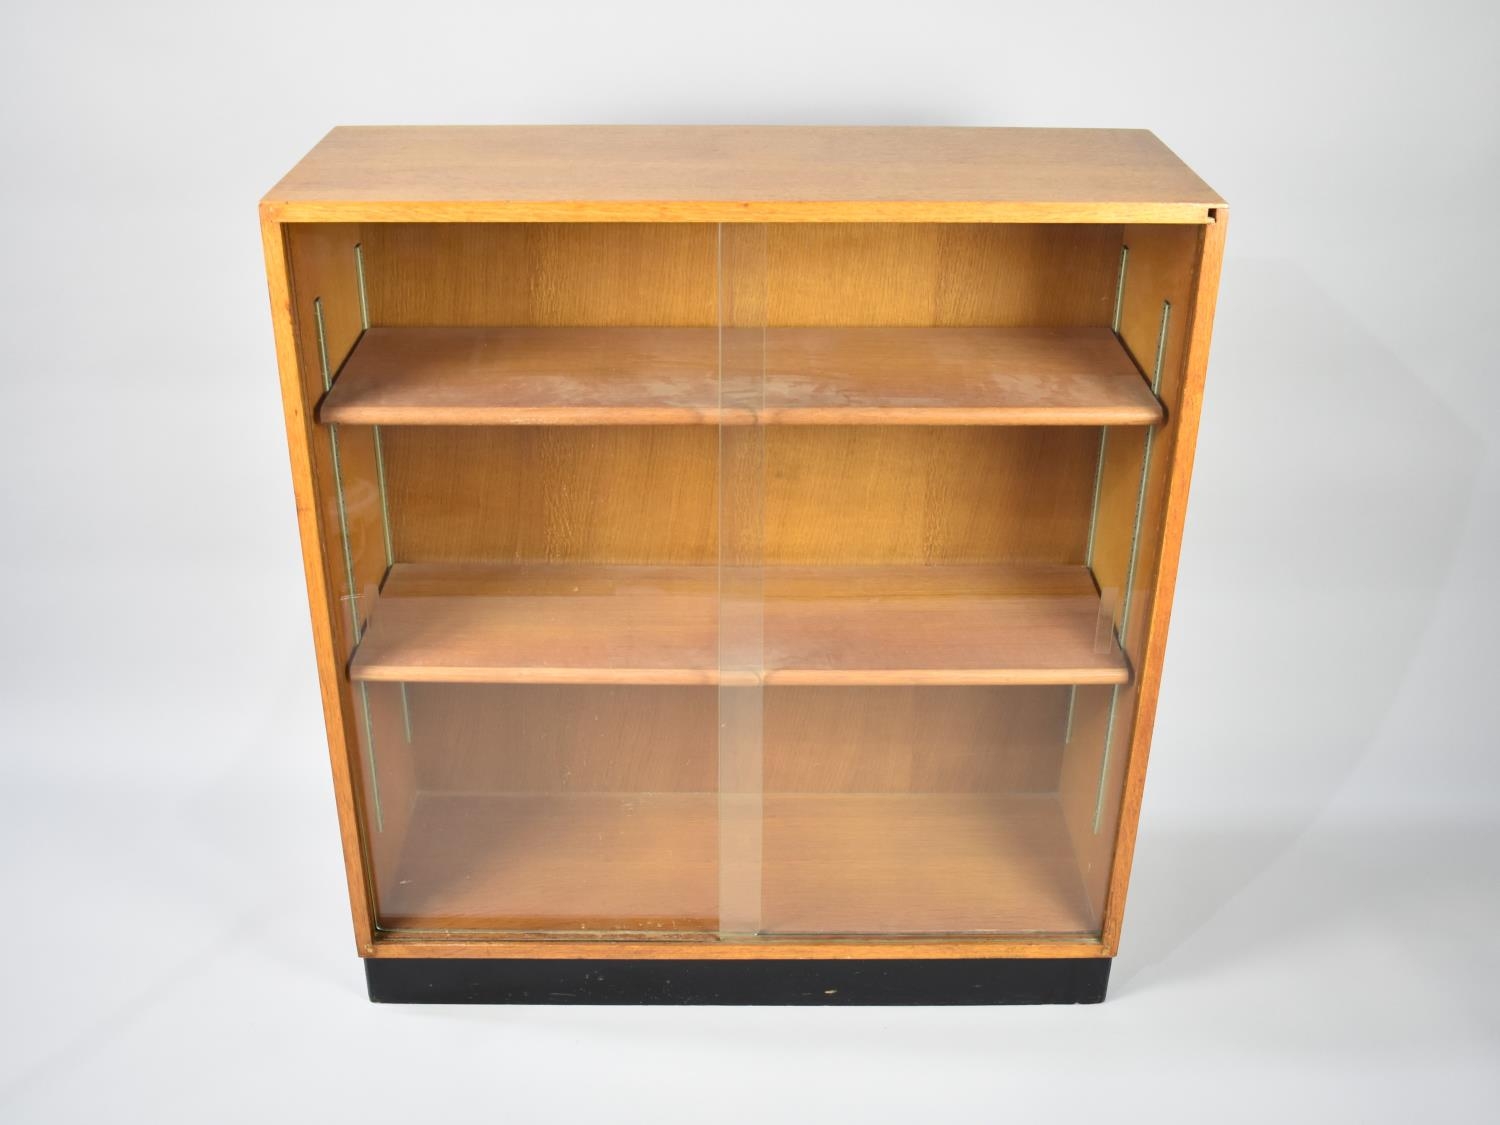 A Vintage Glazed Light Oak Bookcase with Two Adjustable Shelves, 84cms Wide